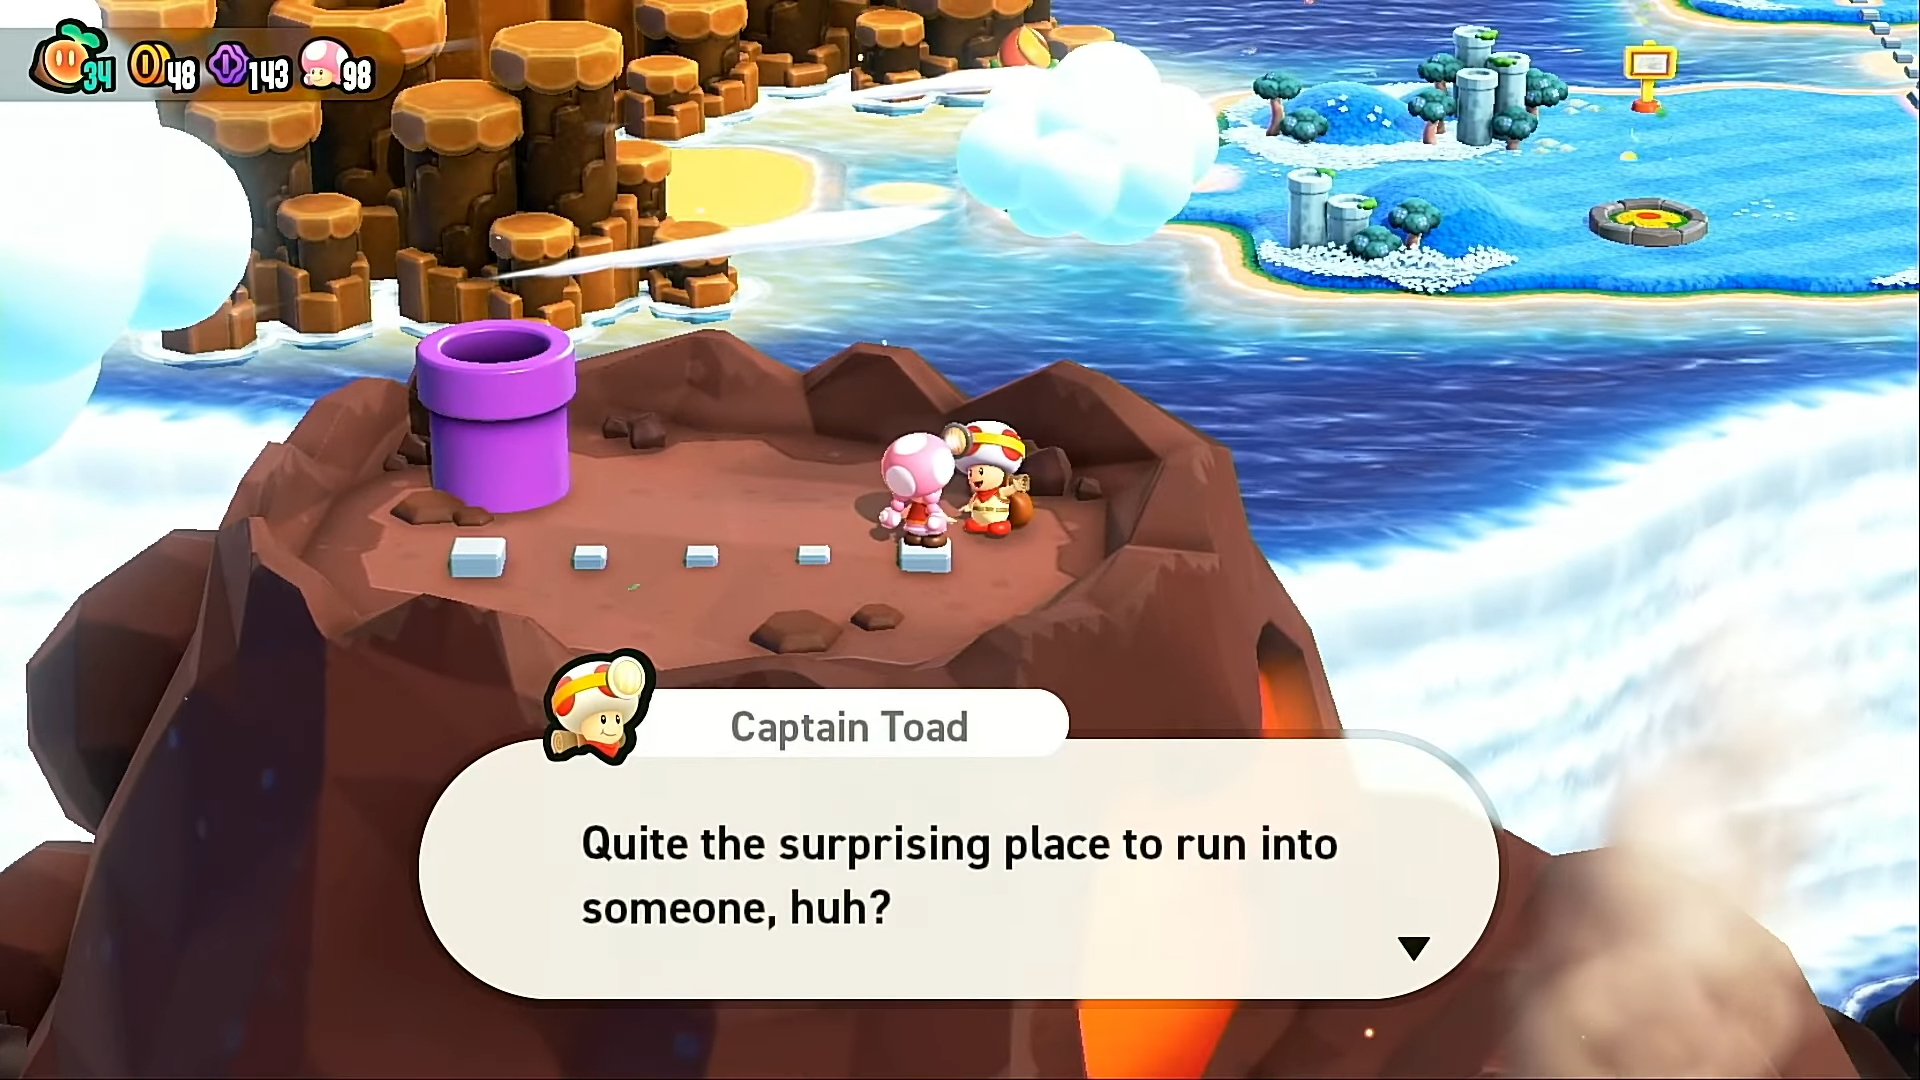 Super Mario Bros. Wonder: all Captain Toad locations